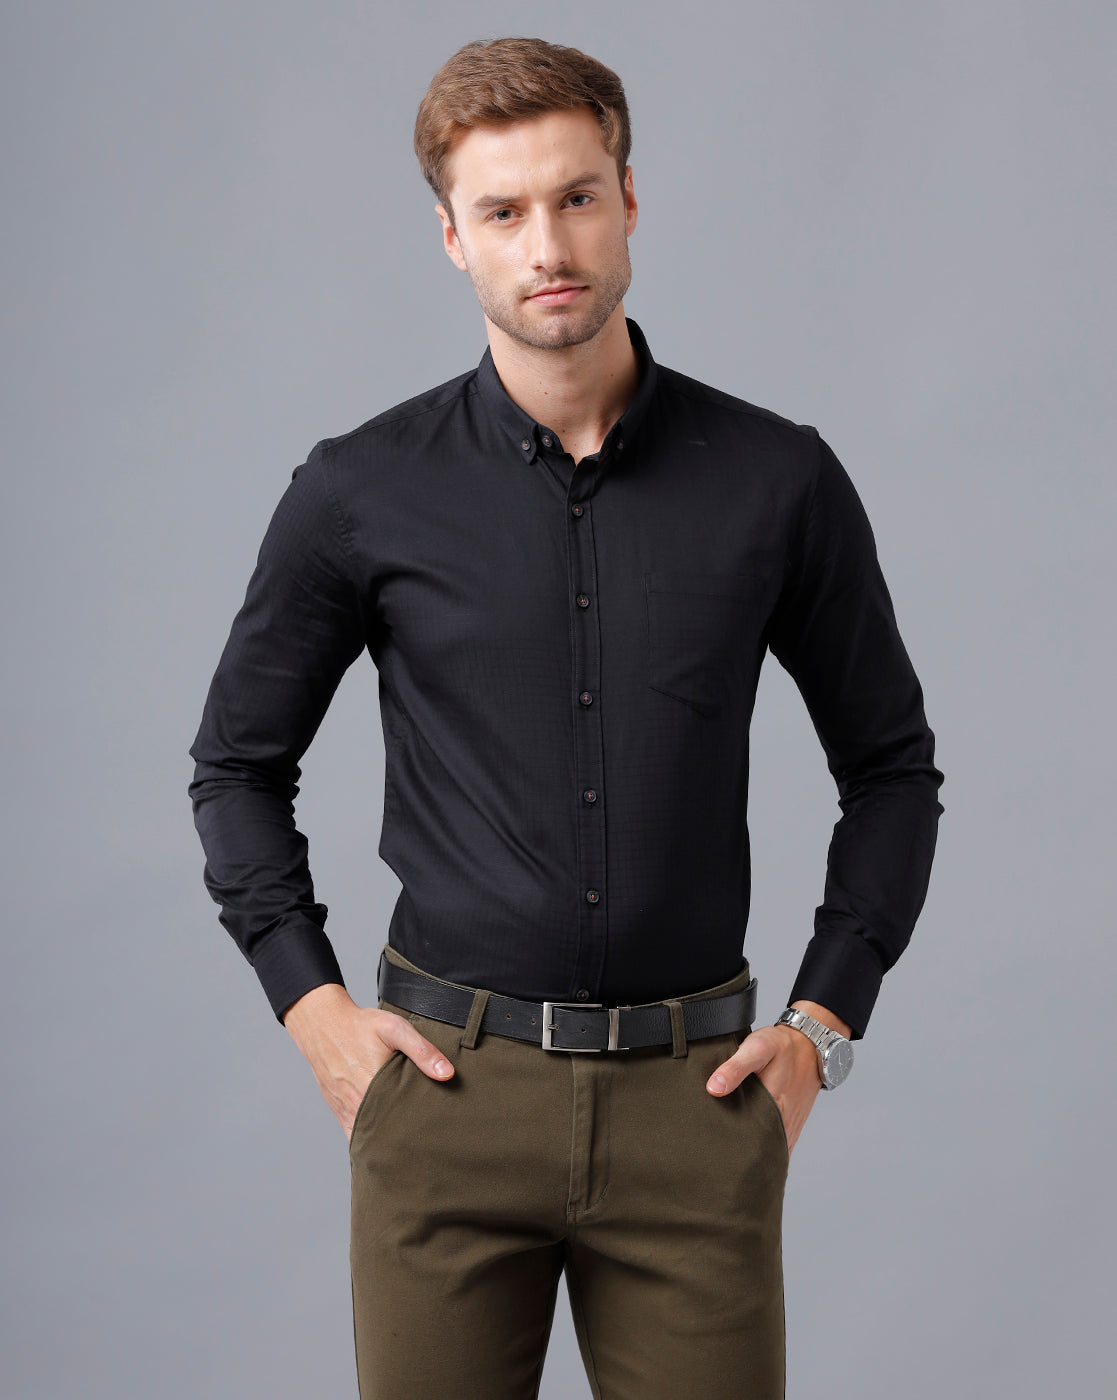 black formal shirt